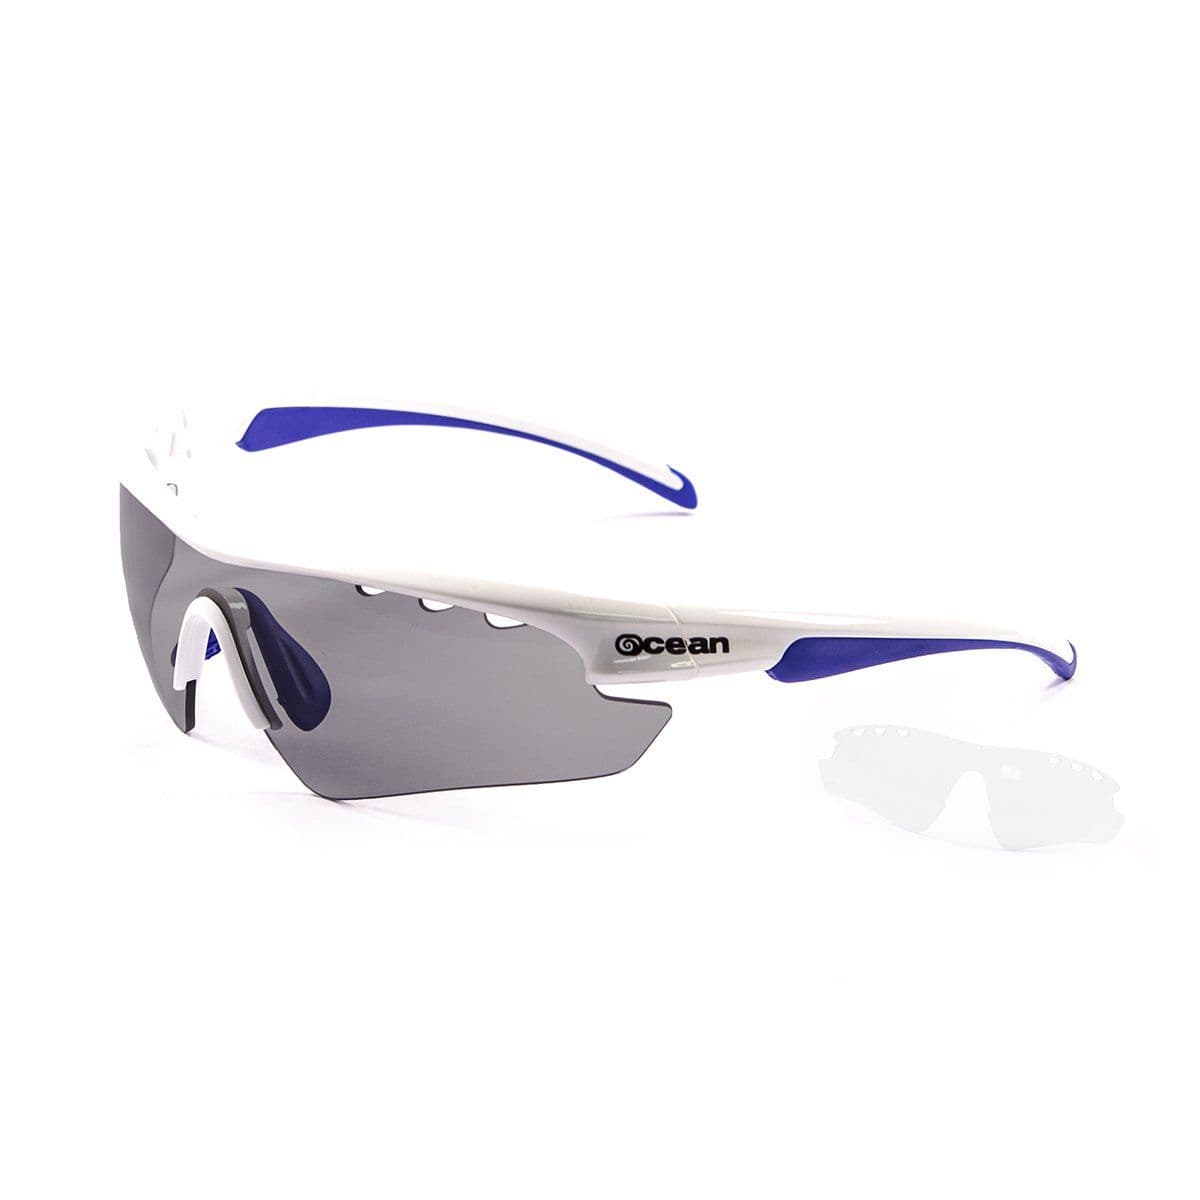 Ocean Ironman Sunglasses